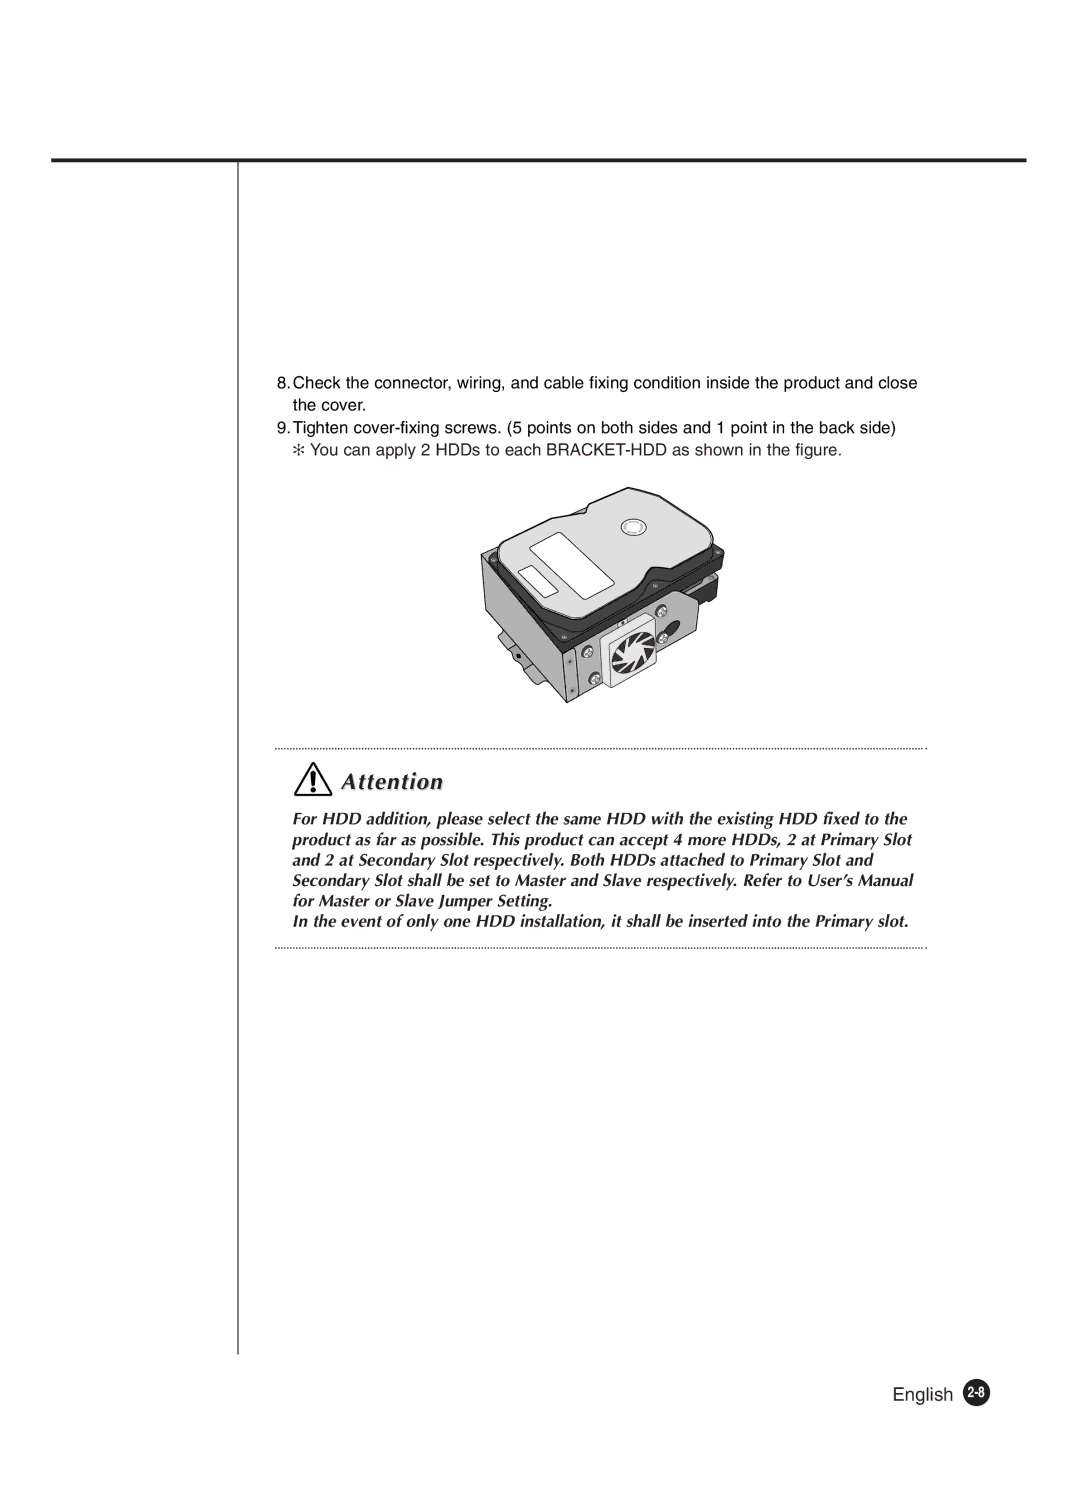 Samsung SHR-4160P manual English 